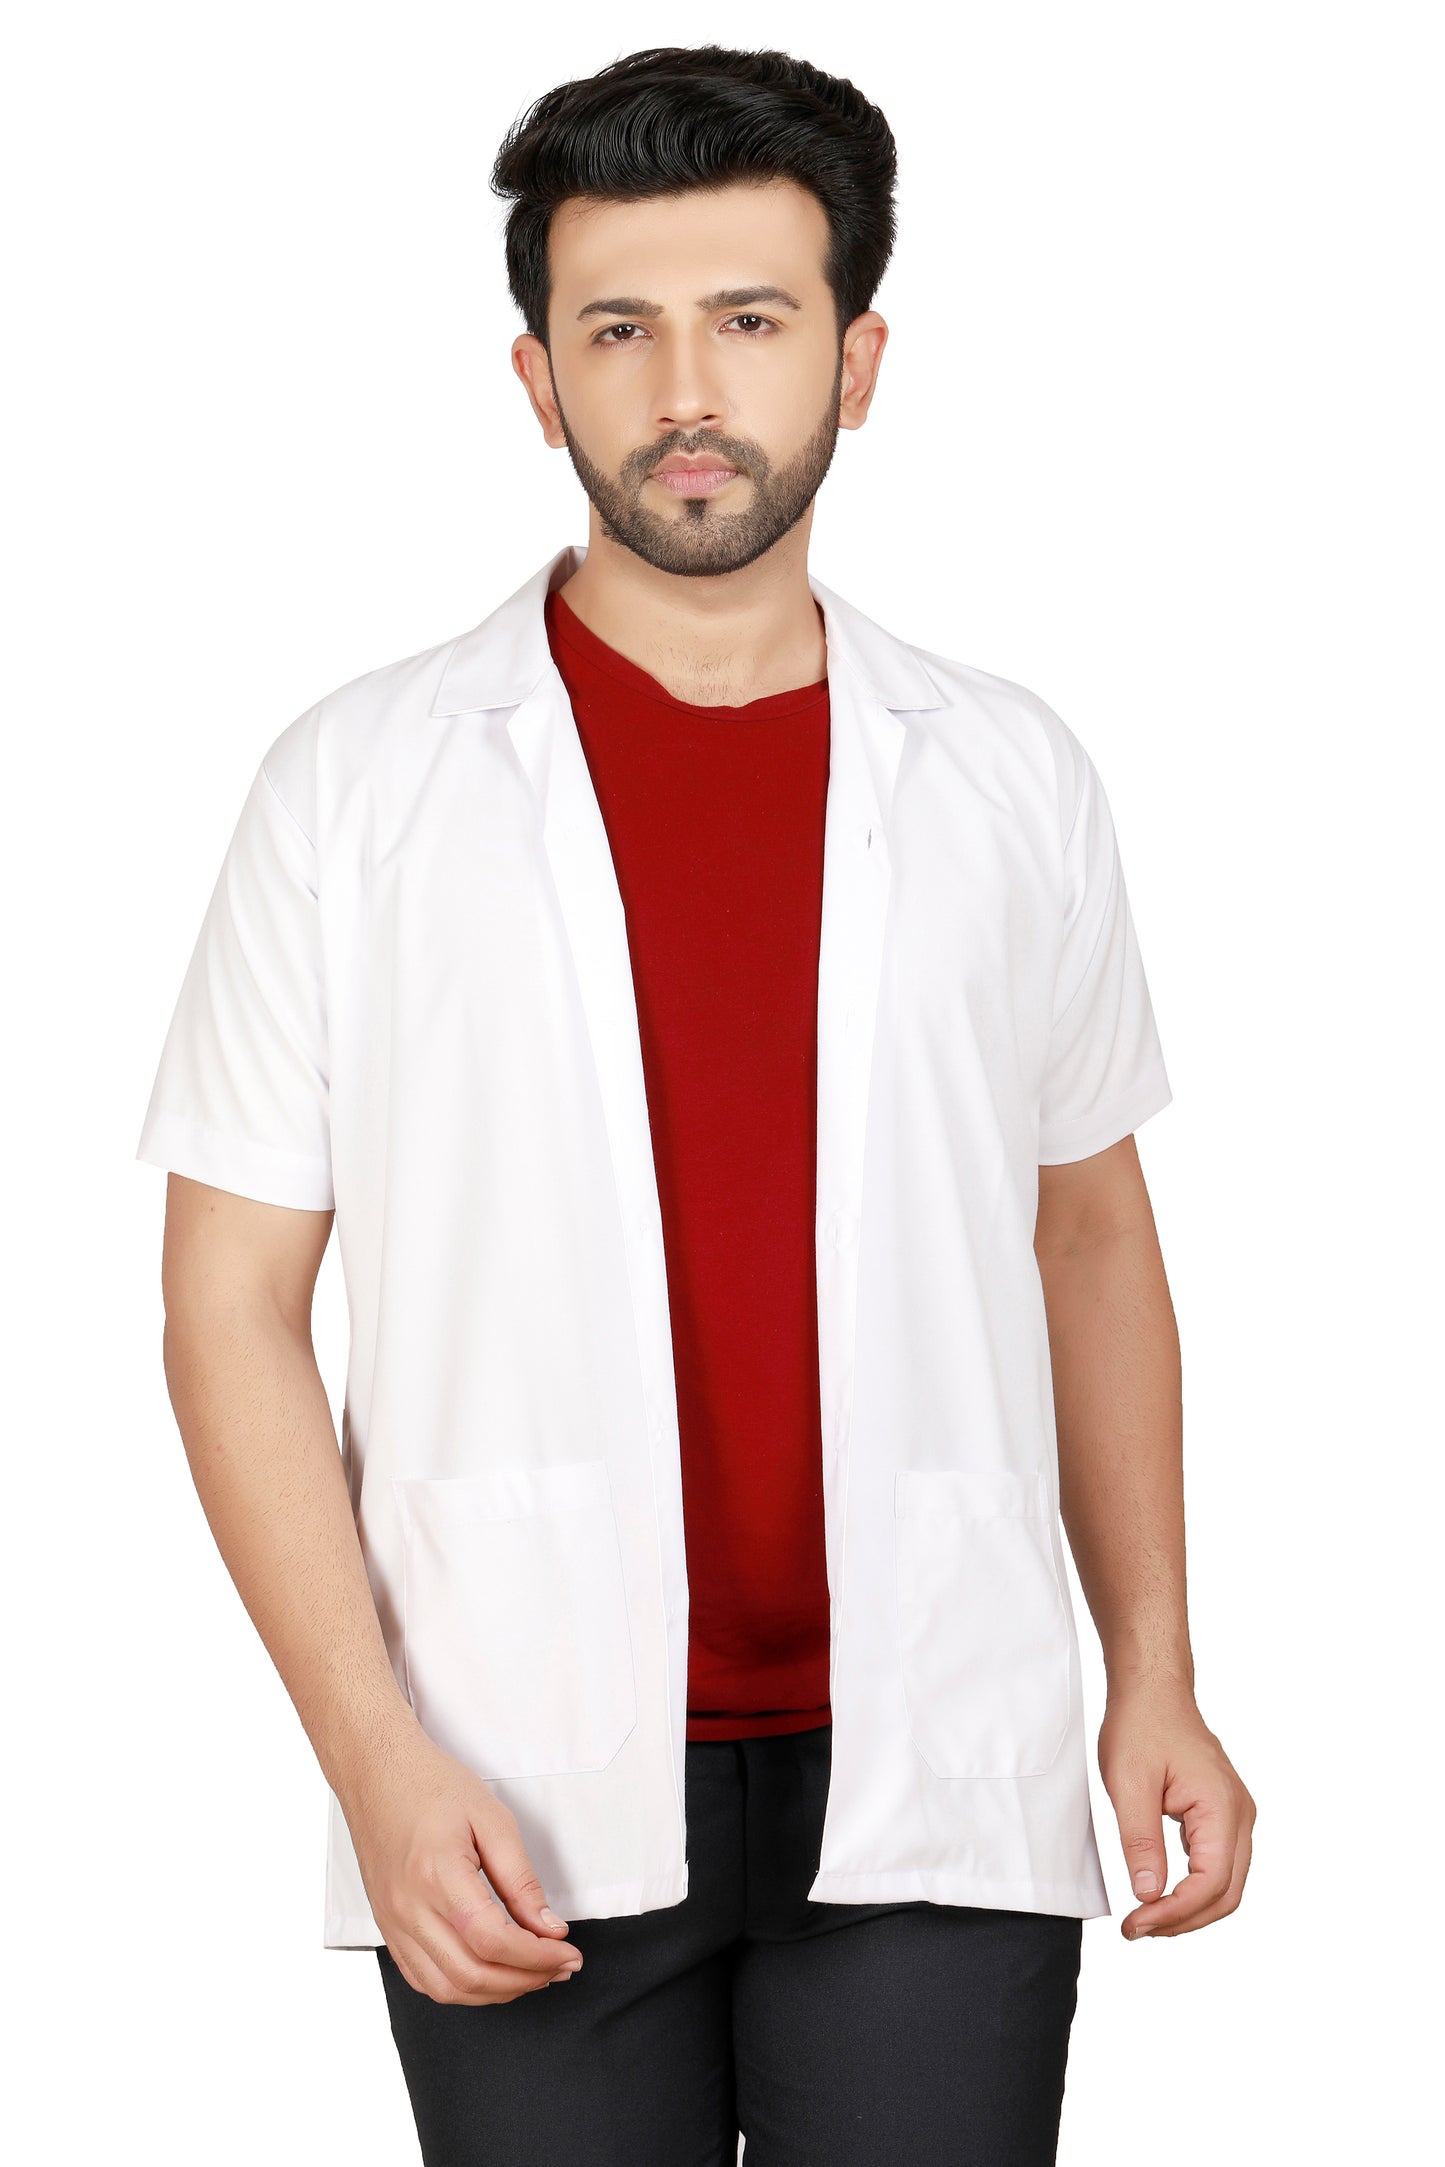 Cotton Unisex Apron Lab Coat - Regular Length - Half Sleeves - White